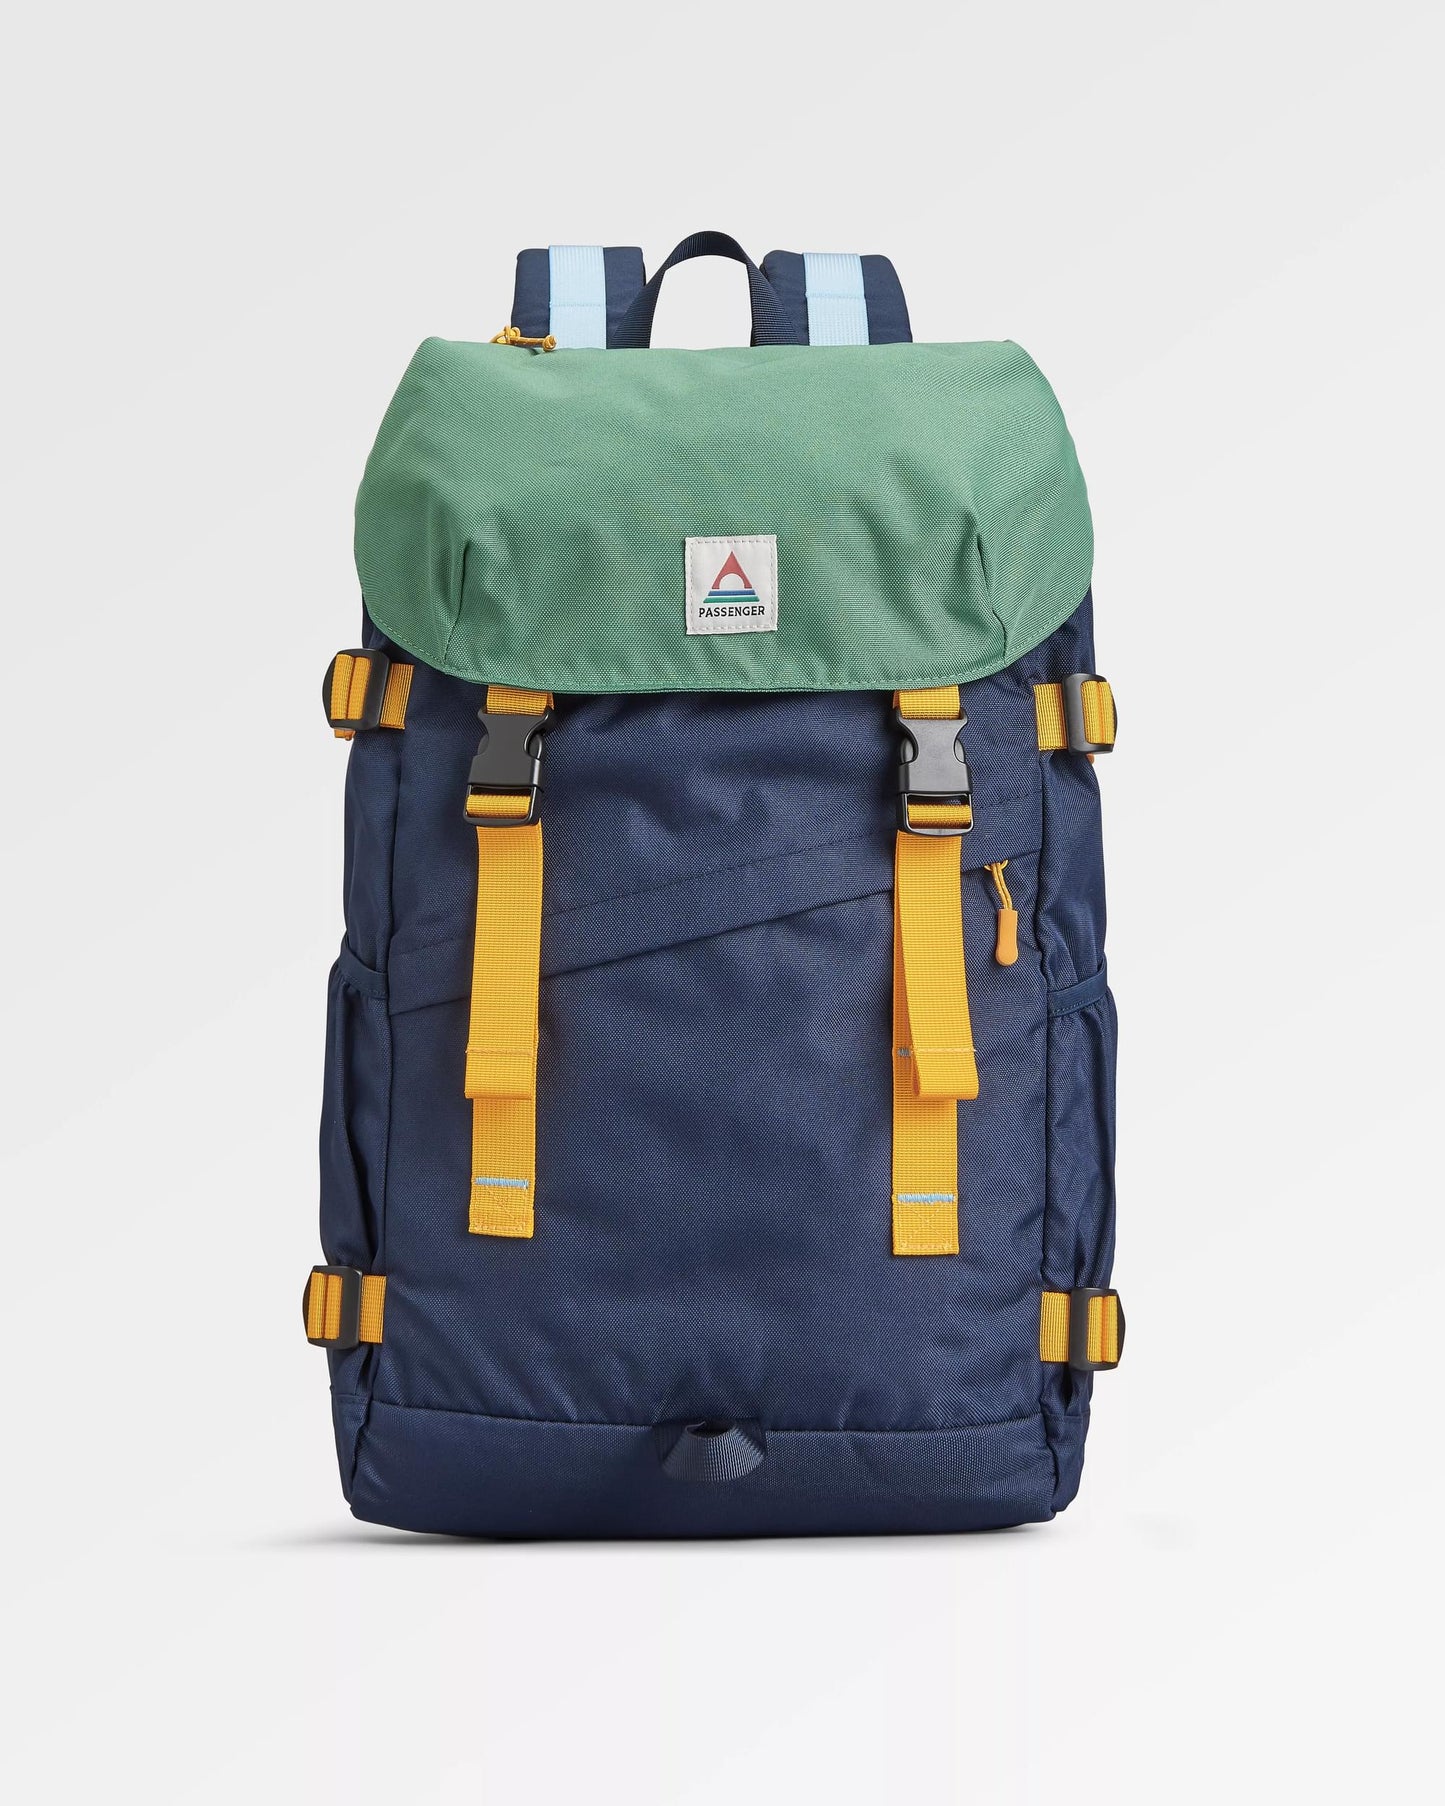 Boondocker Recycled 26L Backpack - Navy/ Laurel Green